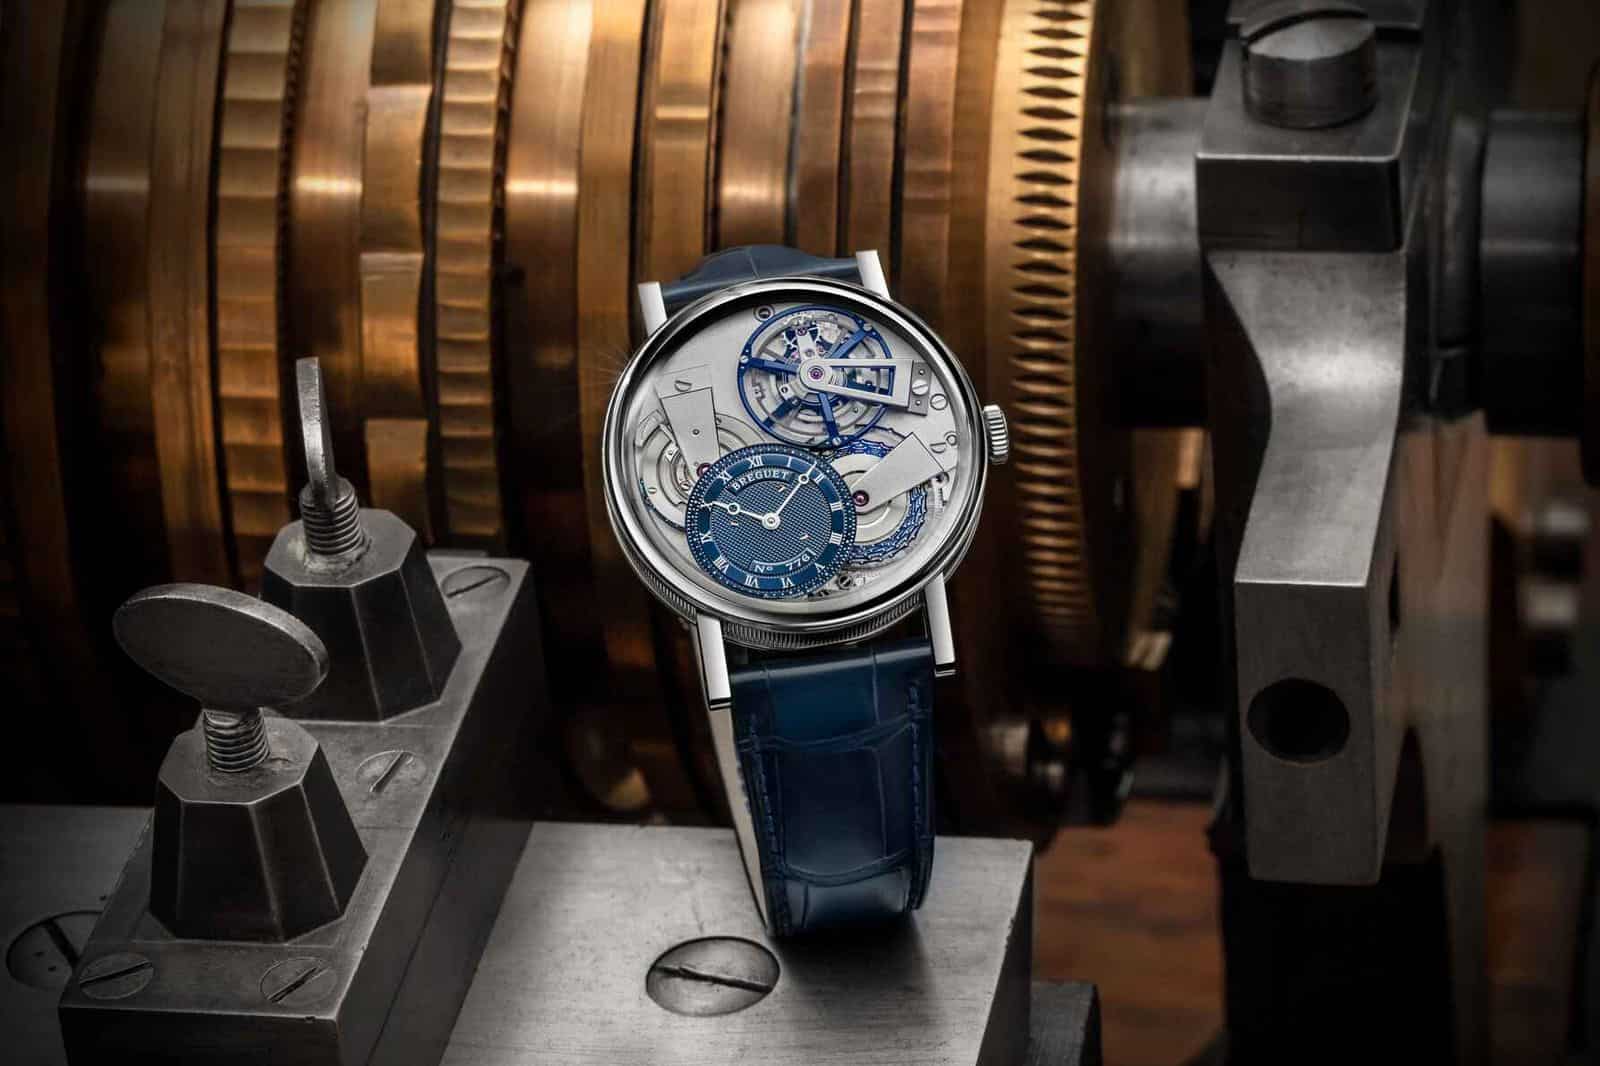 Breguet รุ่นใหม่ล่าสุดจากคอลเลกชั่น Tradition เป็นการระลึกถึงการสร้างสรรค์นาฬิกา Tourbillon โดย Abraham-Louis